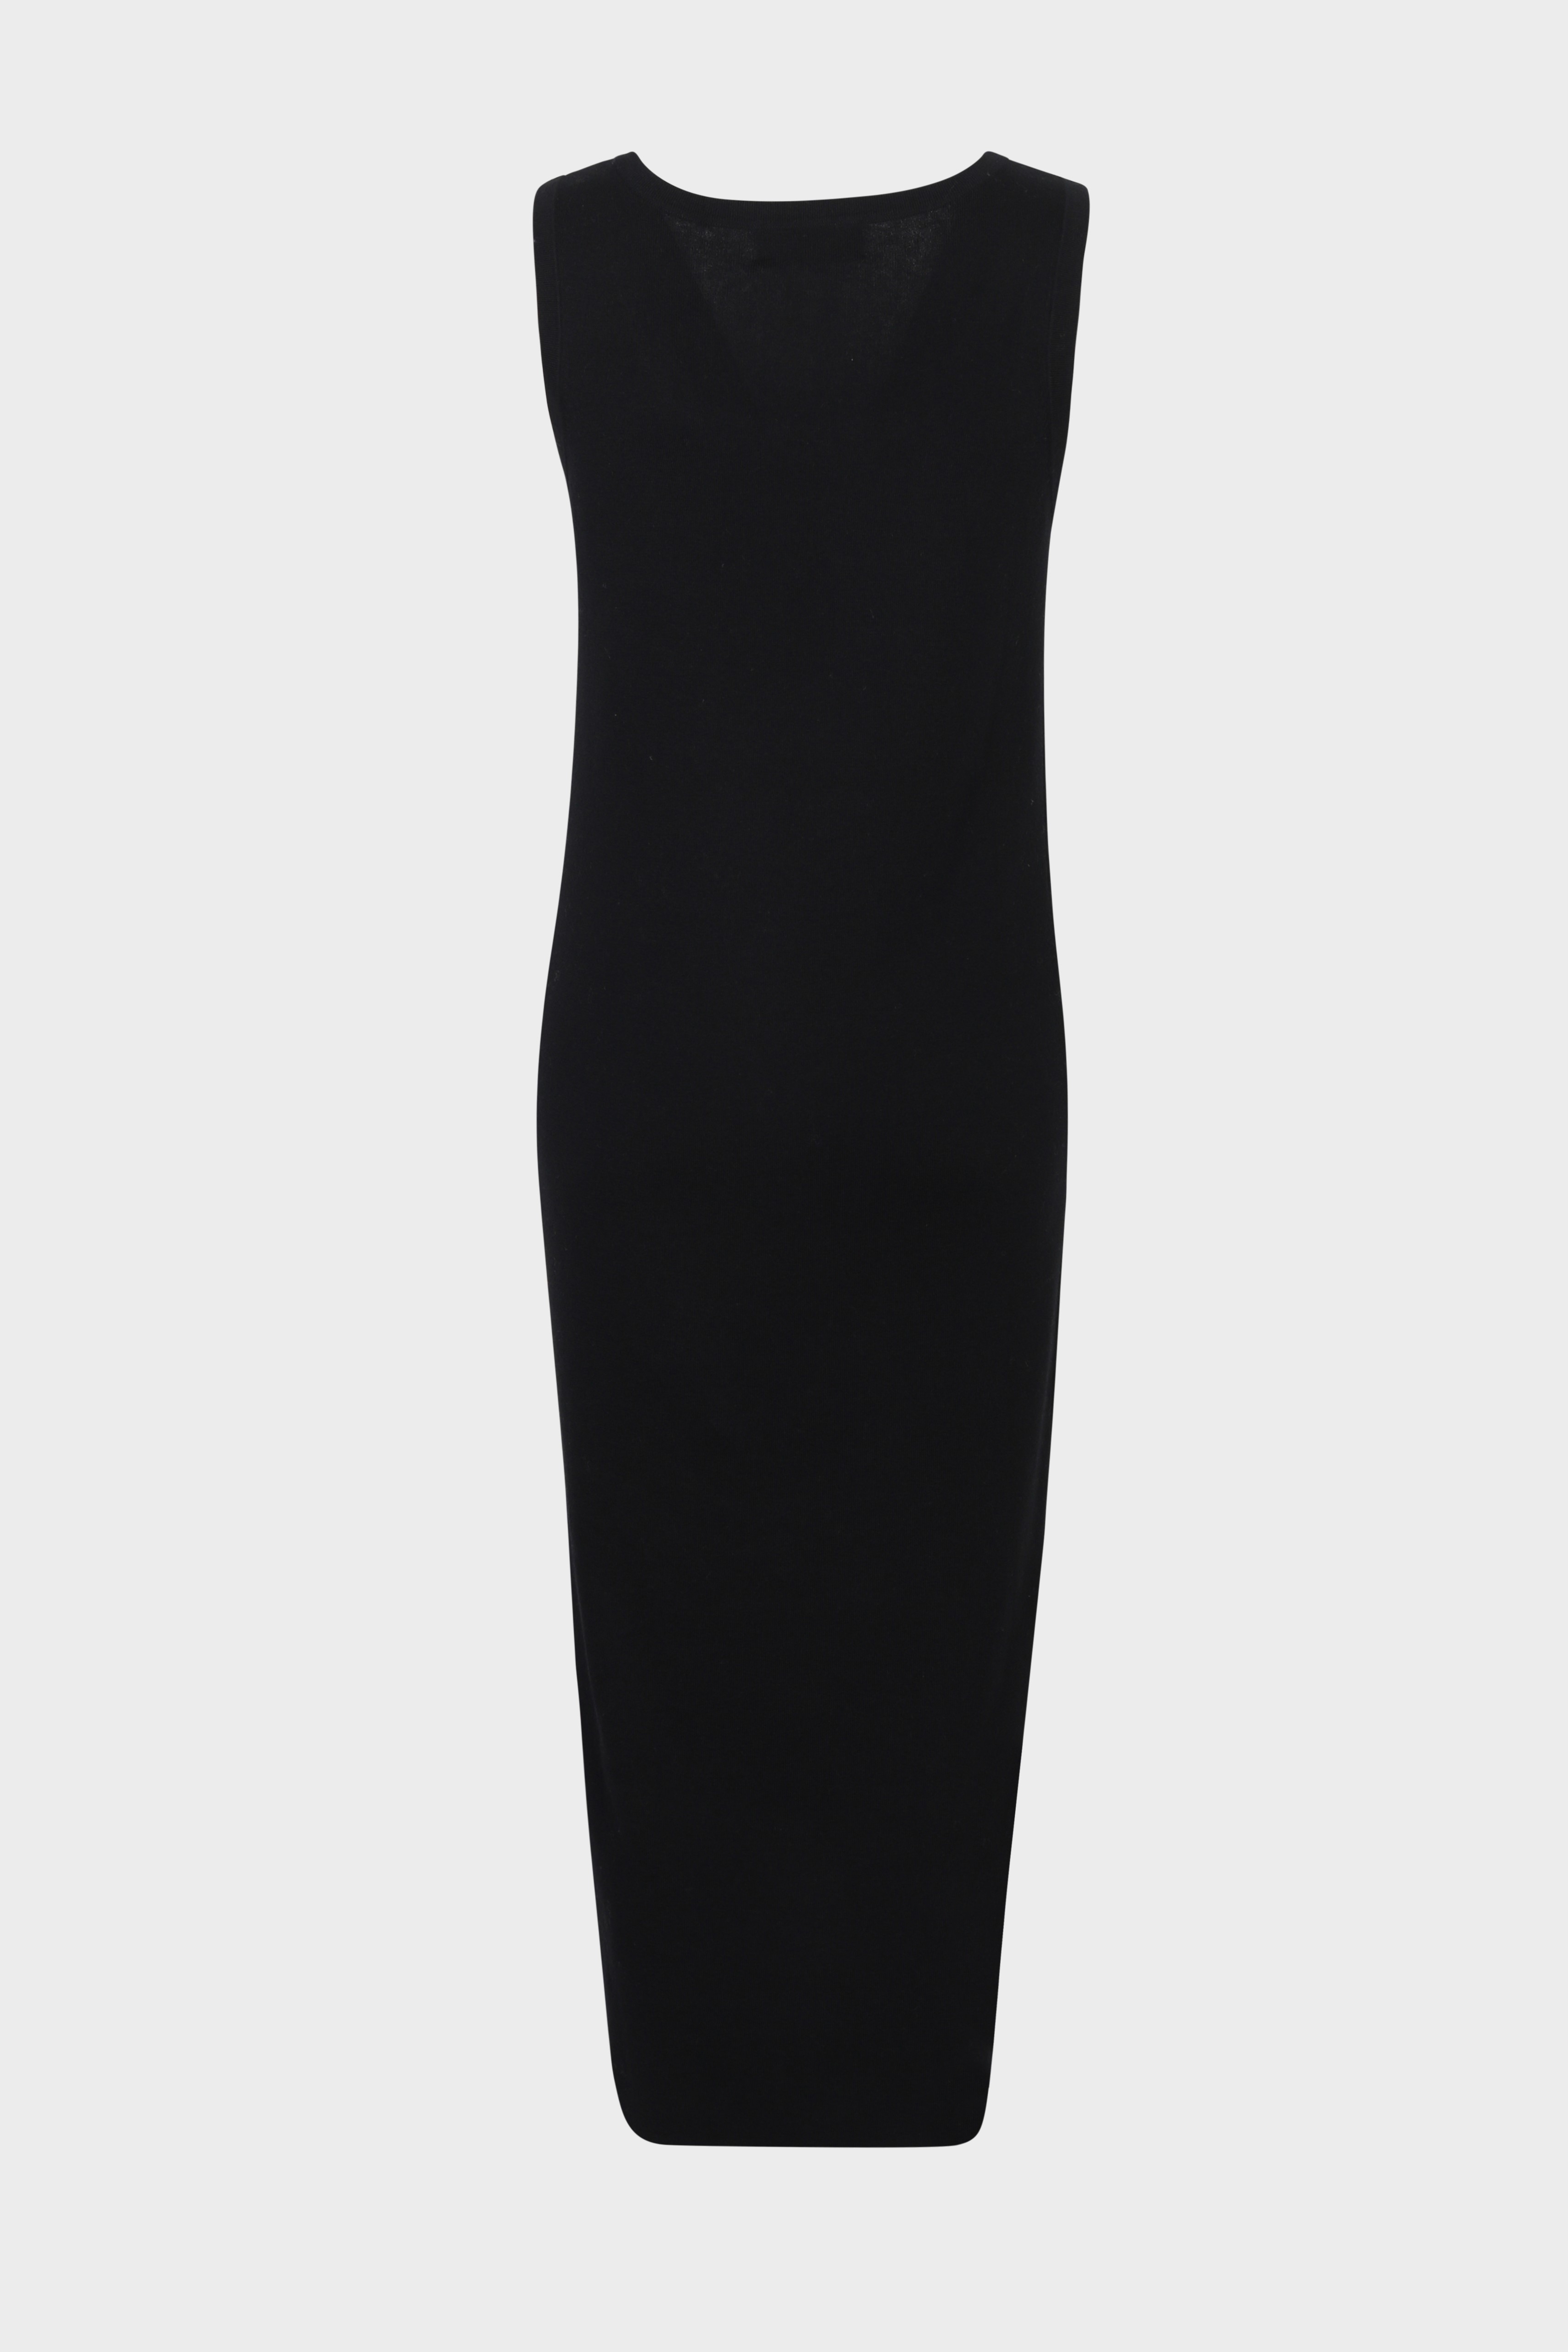 SMINFINITY Comfy Knit Maxi Tank Dress in Black XS/S